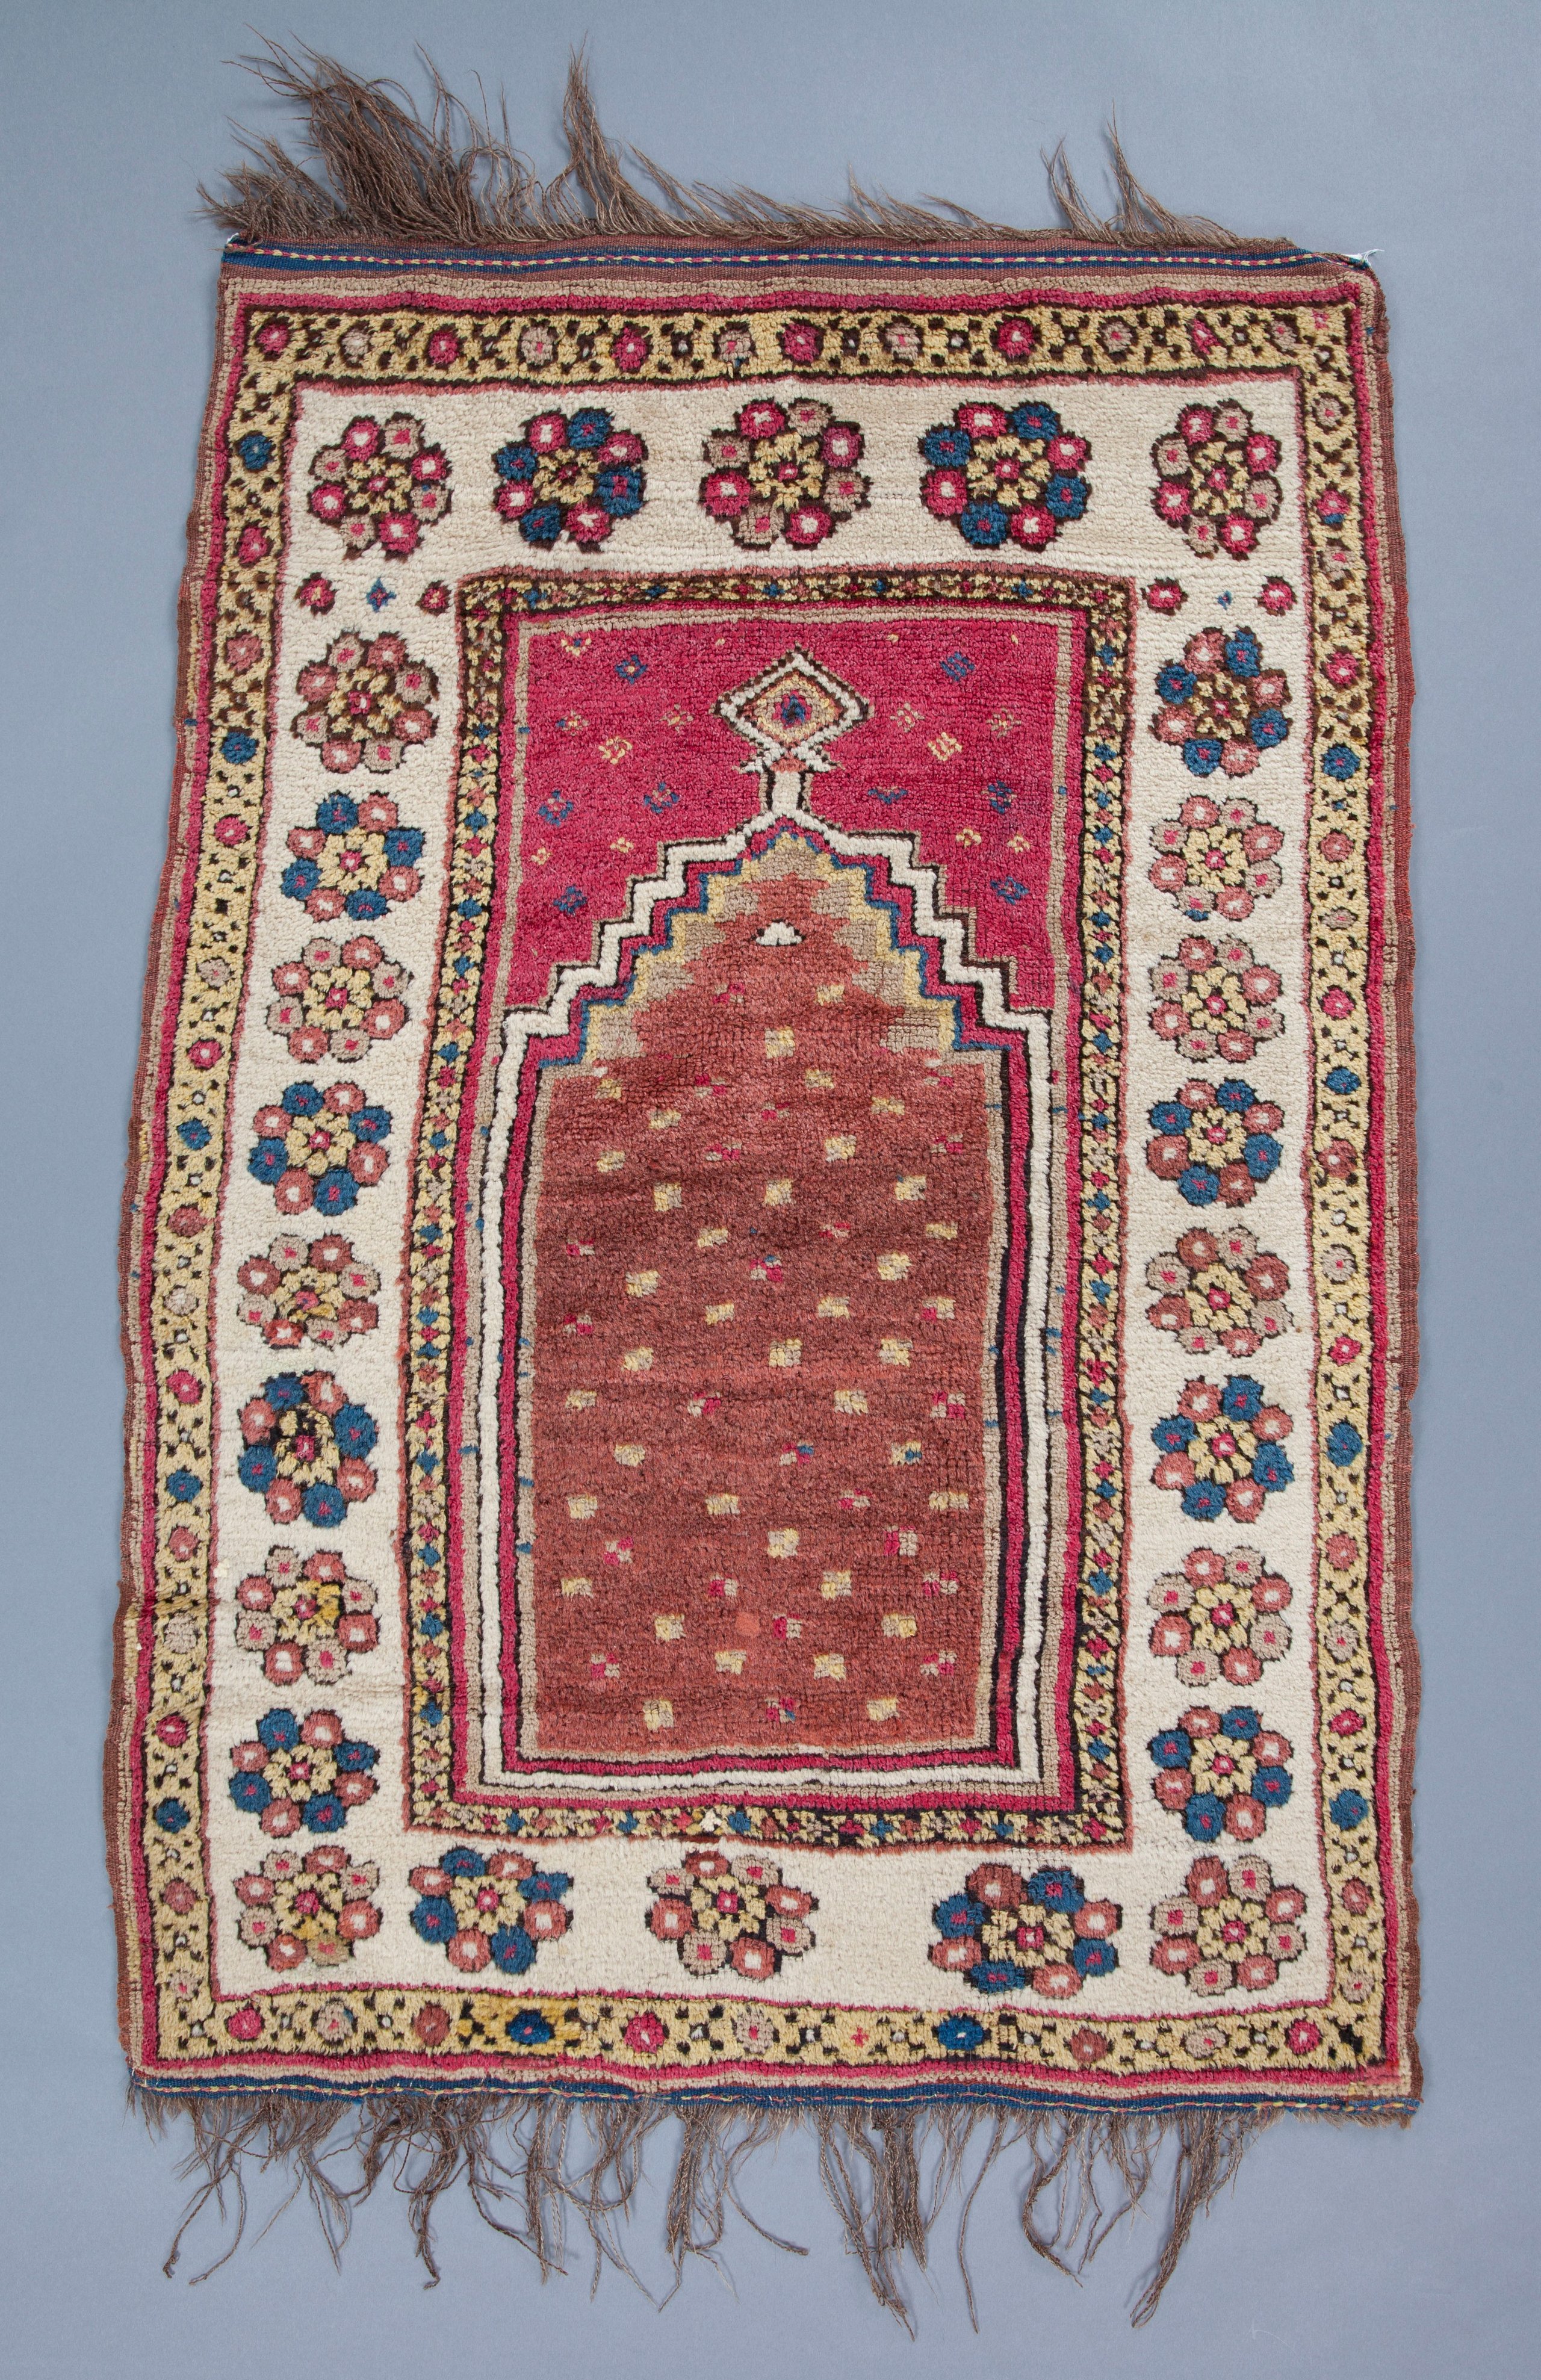 Manastir prayer rug from western Anatolia